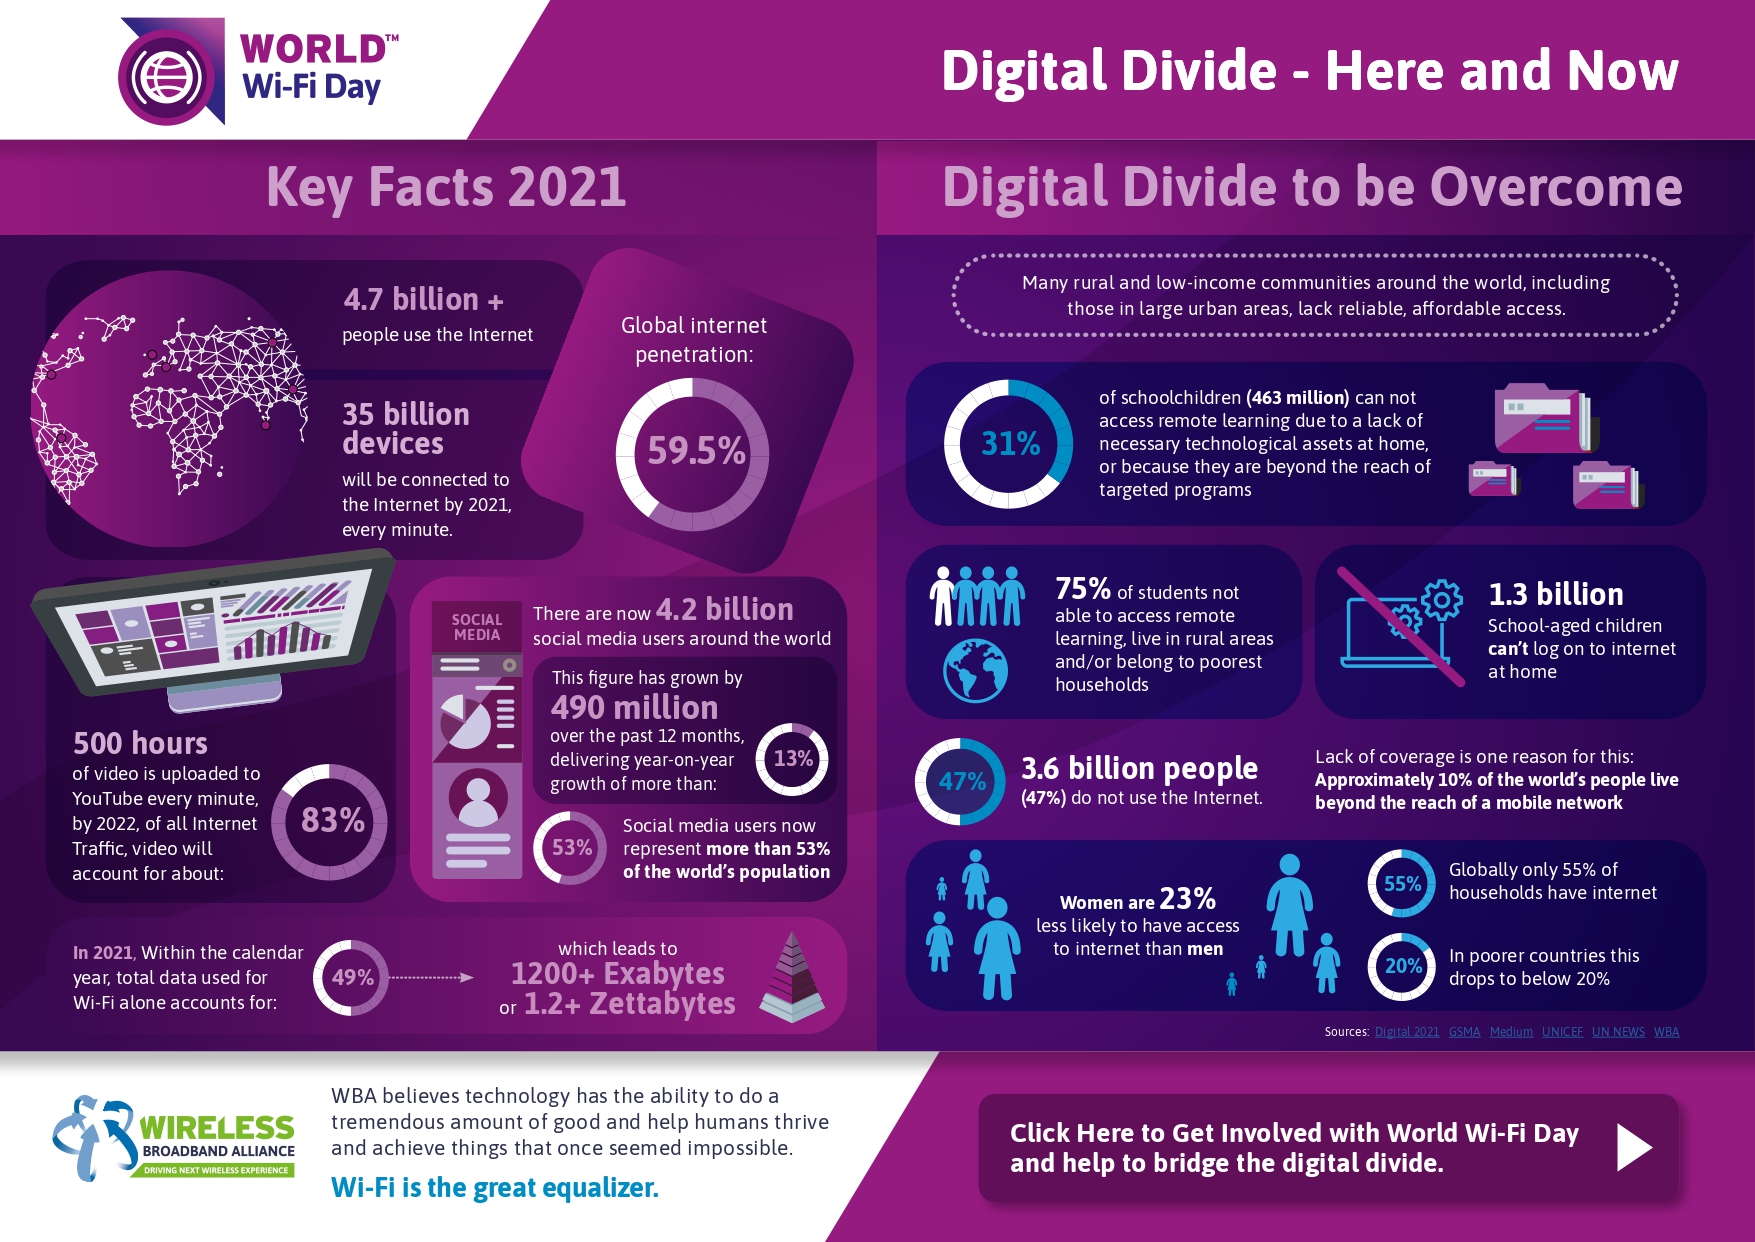 Digital Divide 2021 - World WiFi Day 2021